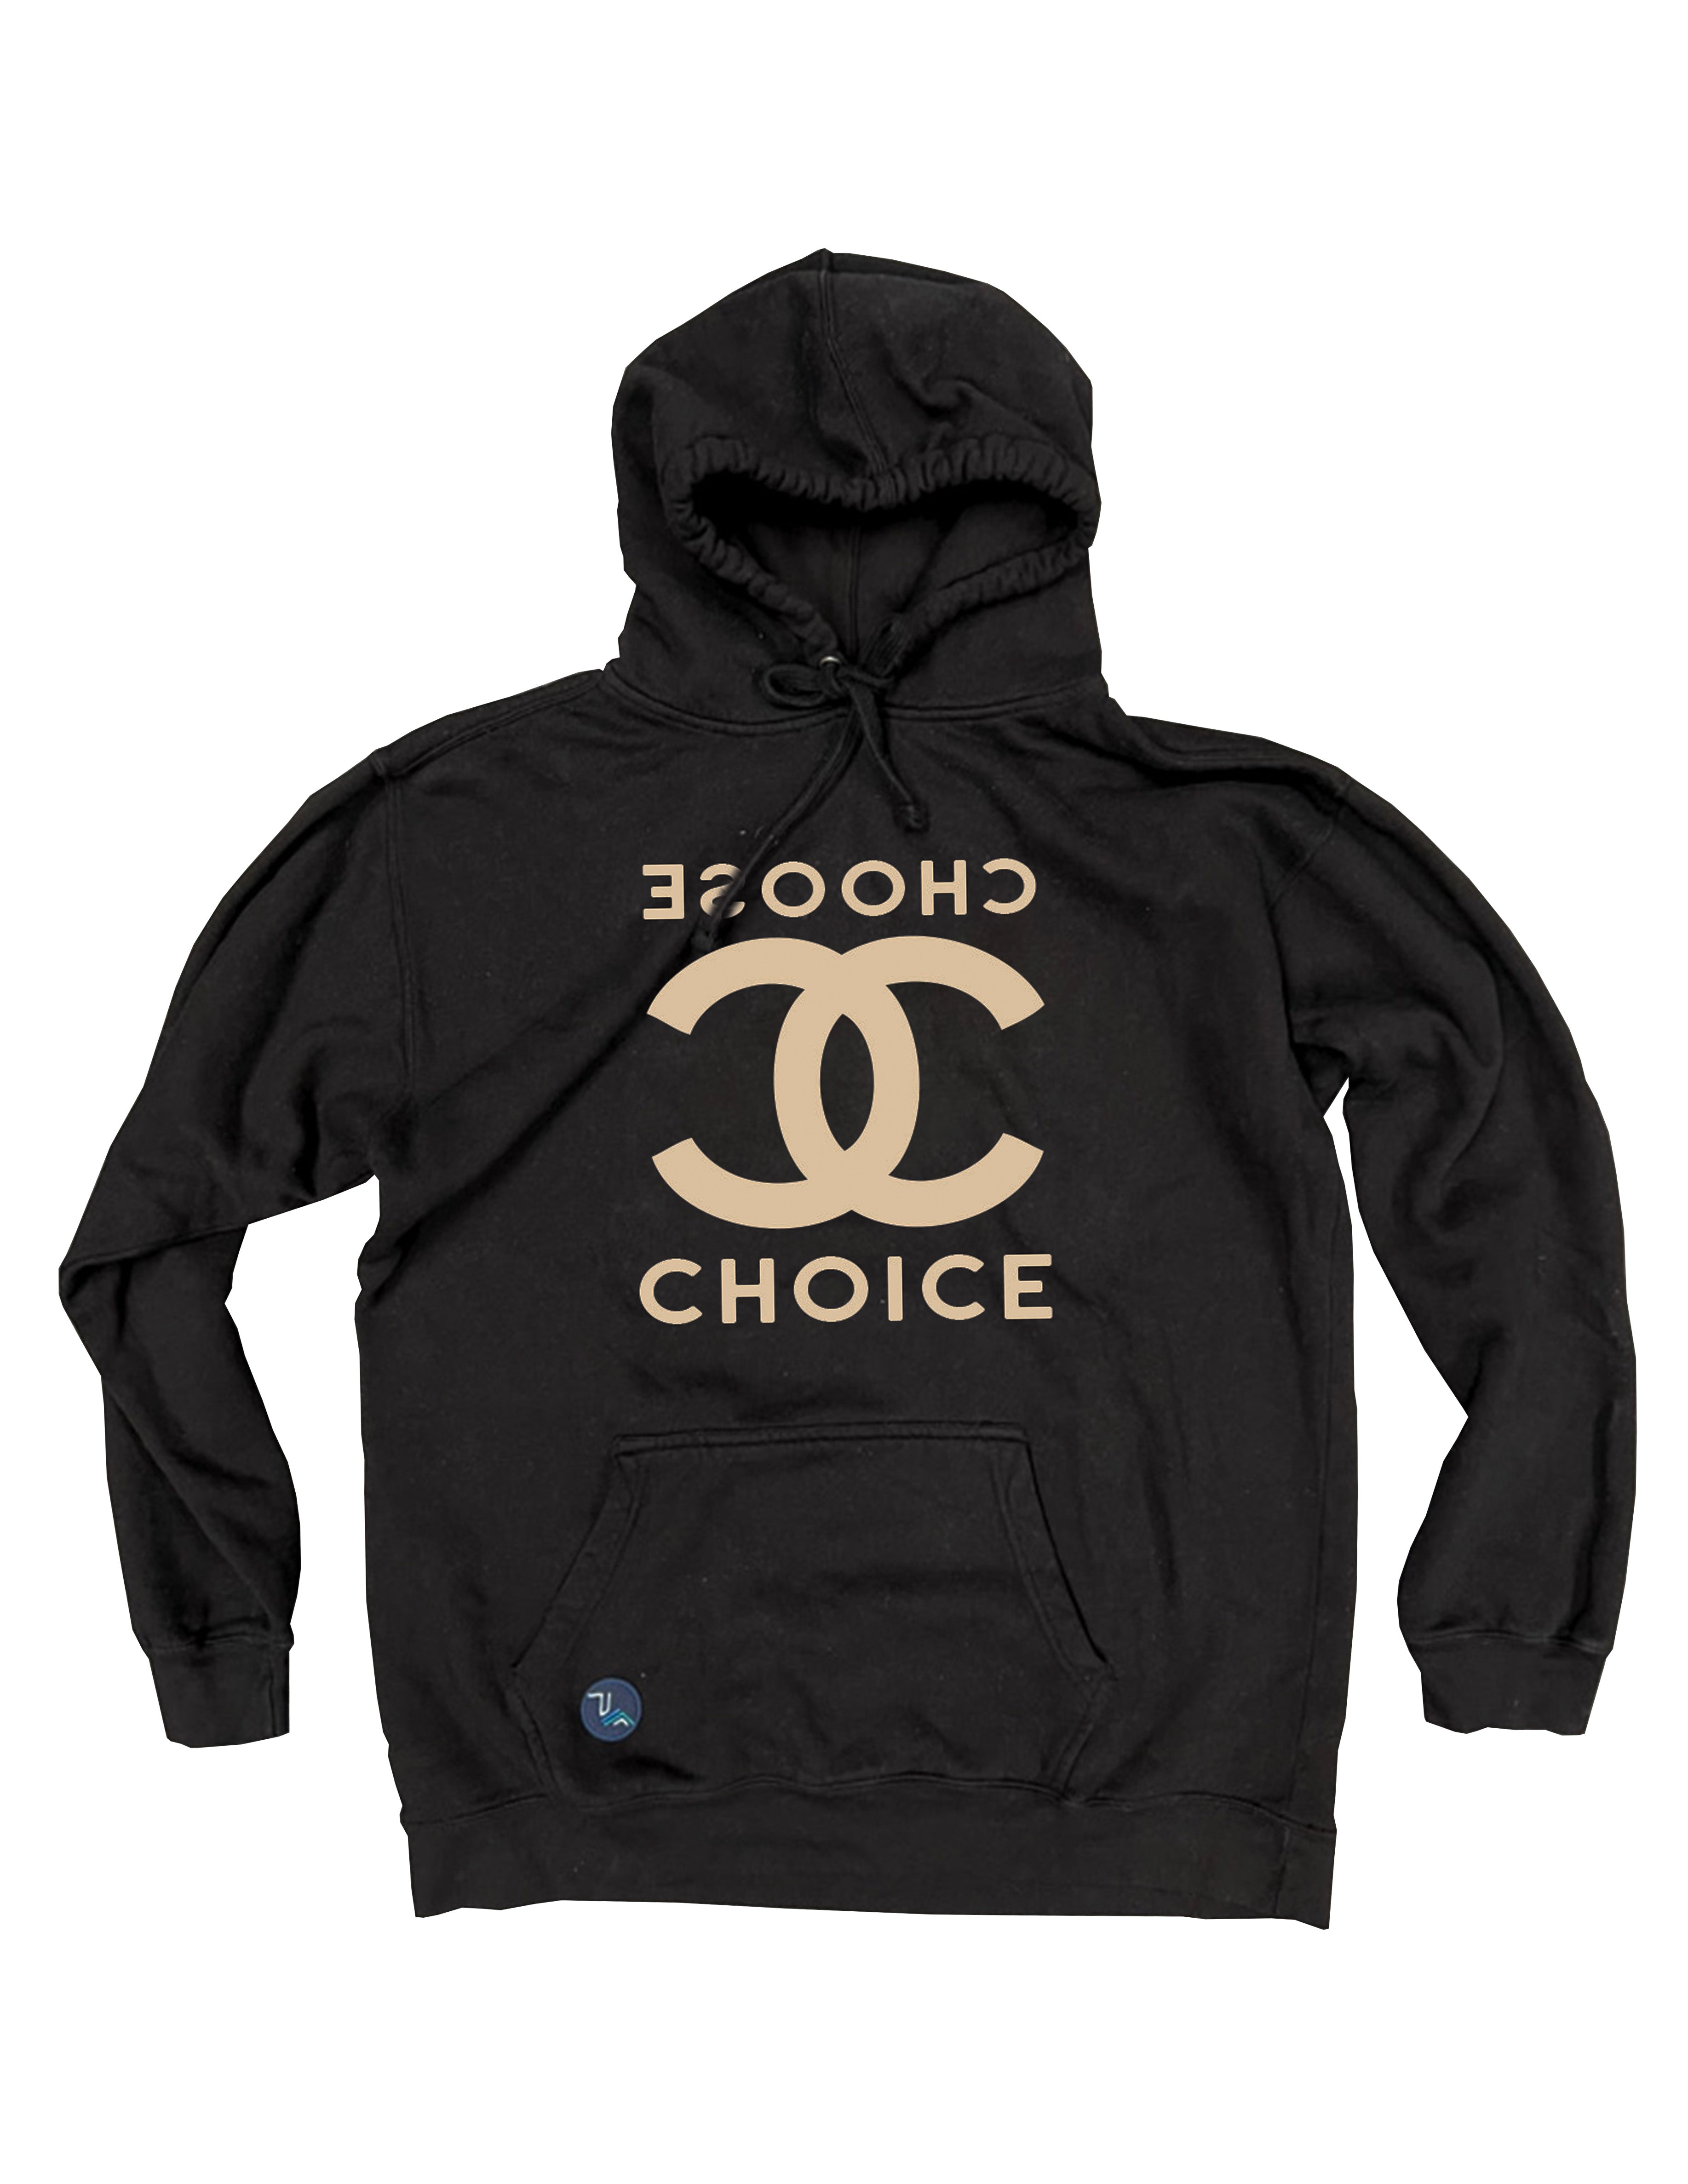 Choose Choice Hoodie – The House of Woo